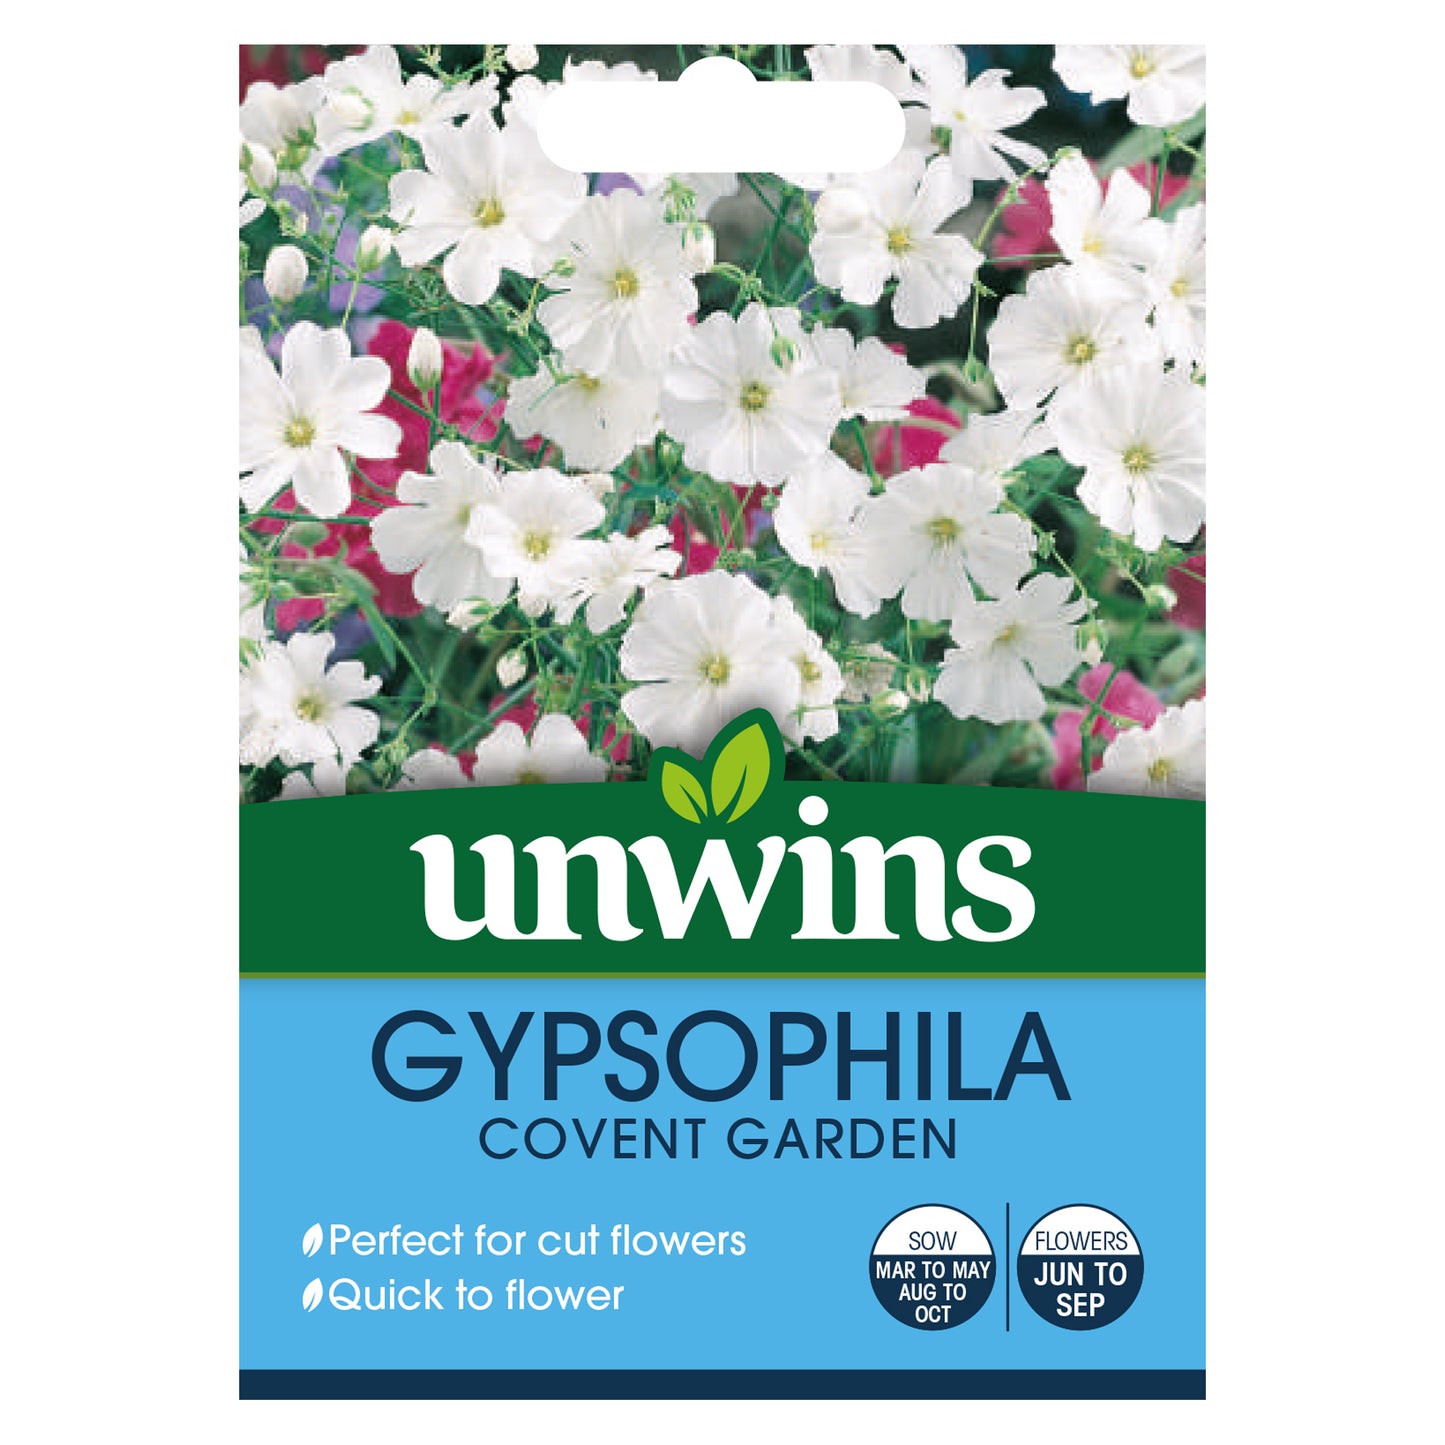 Unwins Gypsophila Covent Garden Seeds front